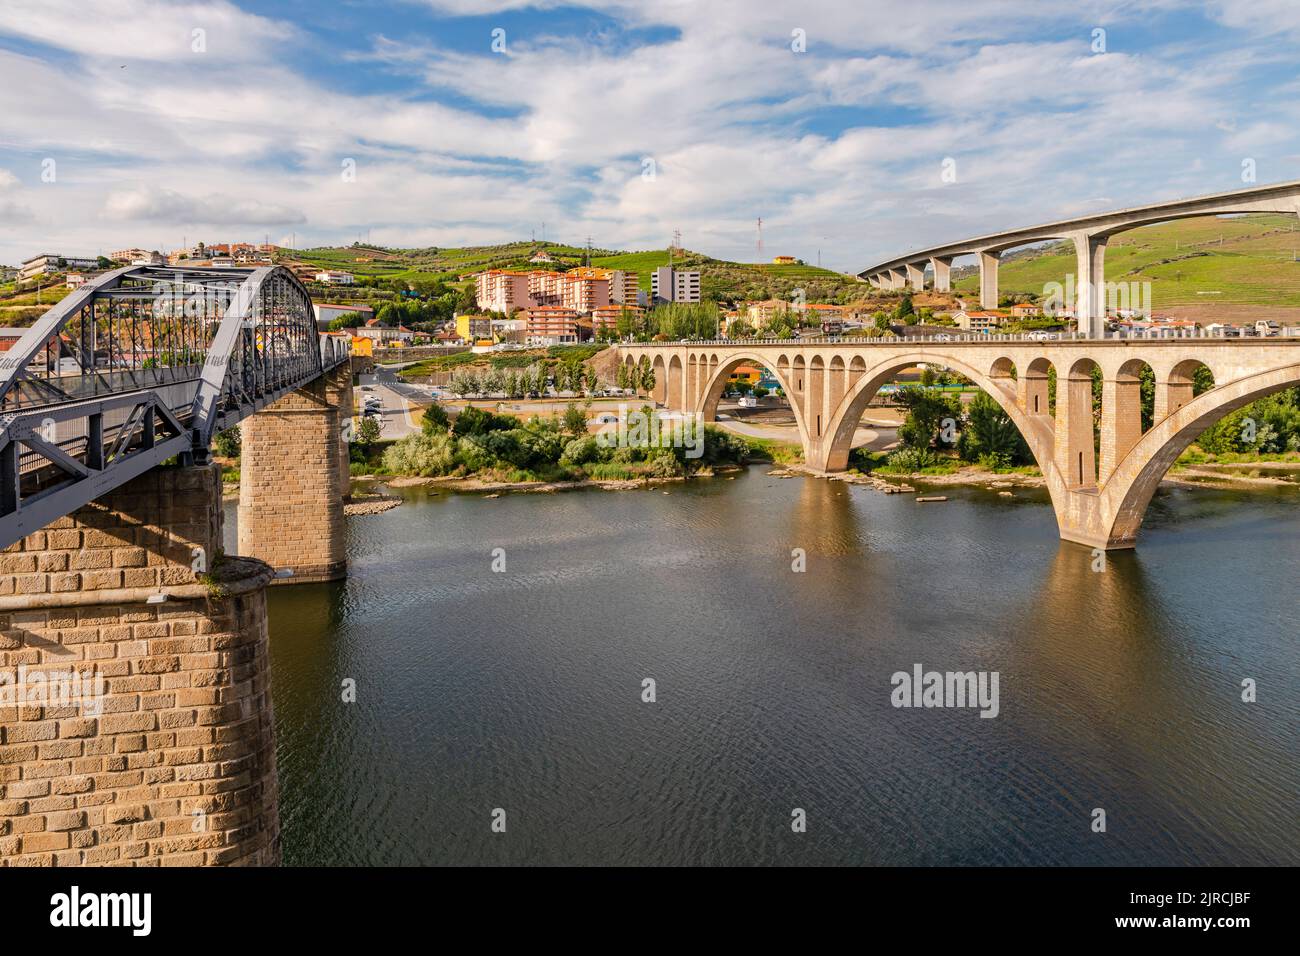 Three bridges cross the Douro at Peso da Regua, connecting the vineyards in the World Heritage Site of Alto Douro, Portugal Stock Photo